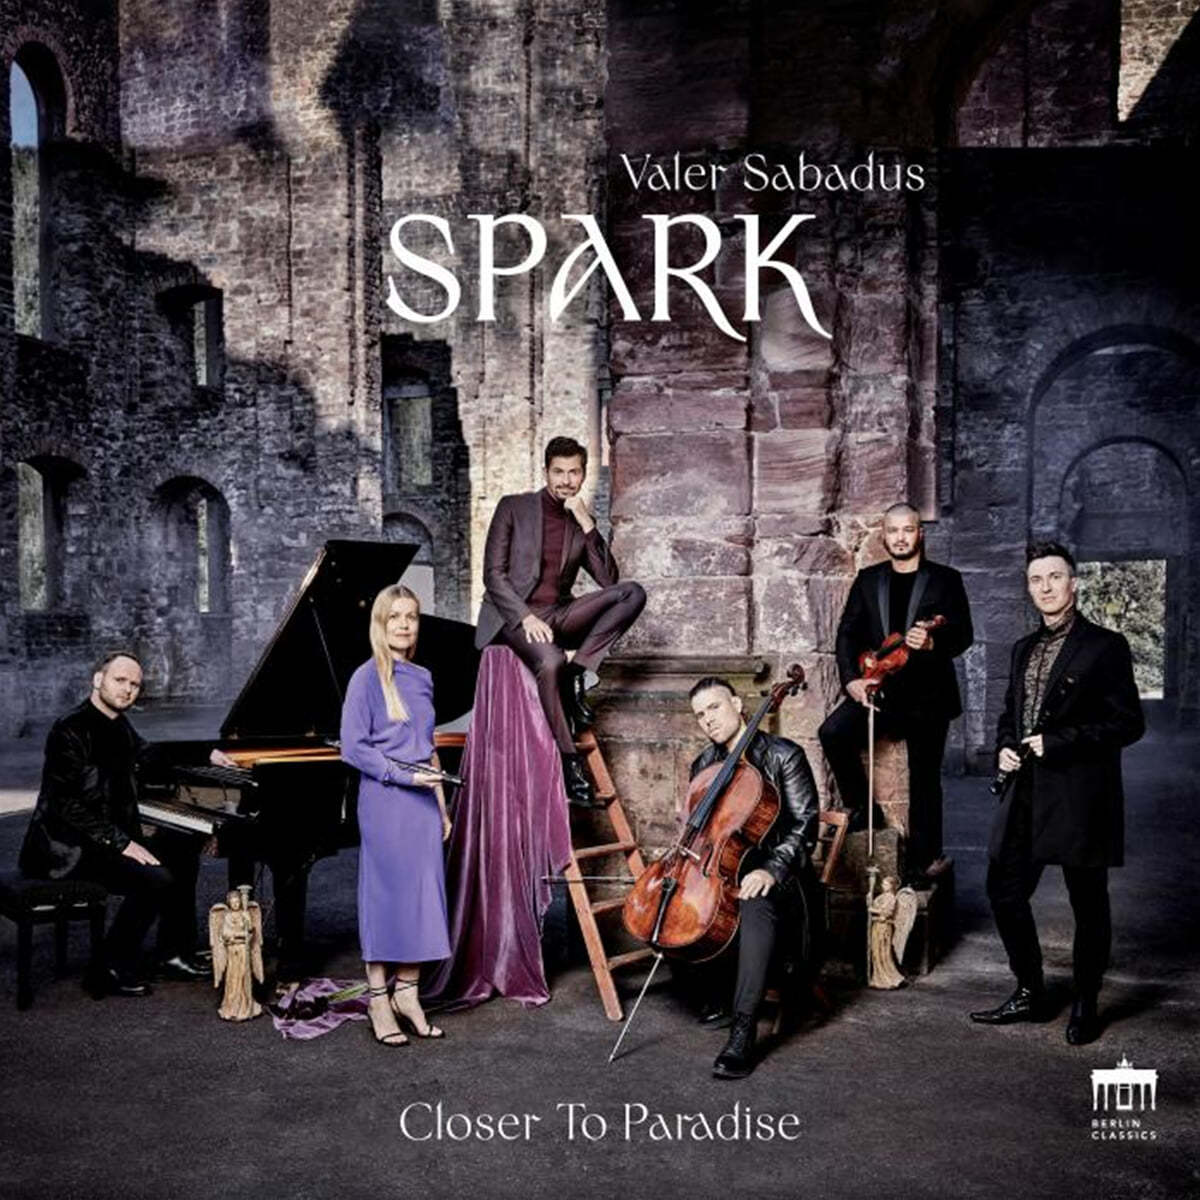 Spark / Valer Sabadus 카운터테너가 노래하는 다채로운 음악 (SPARK - Closer To Paradise)